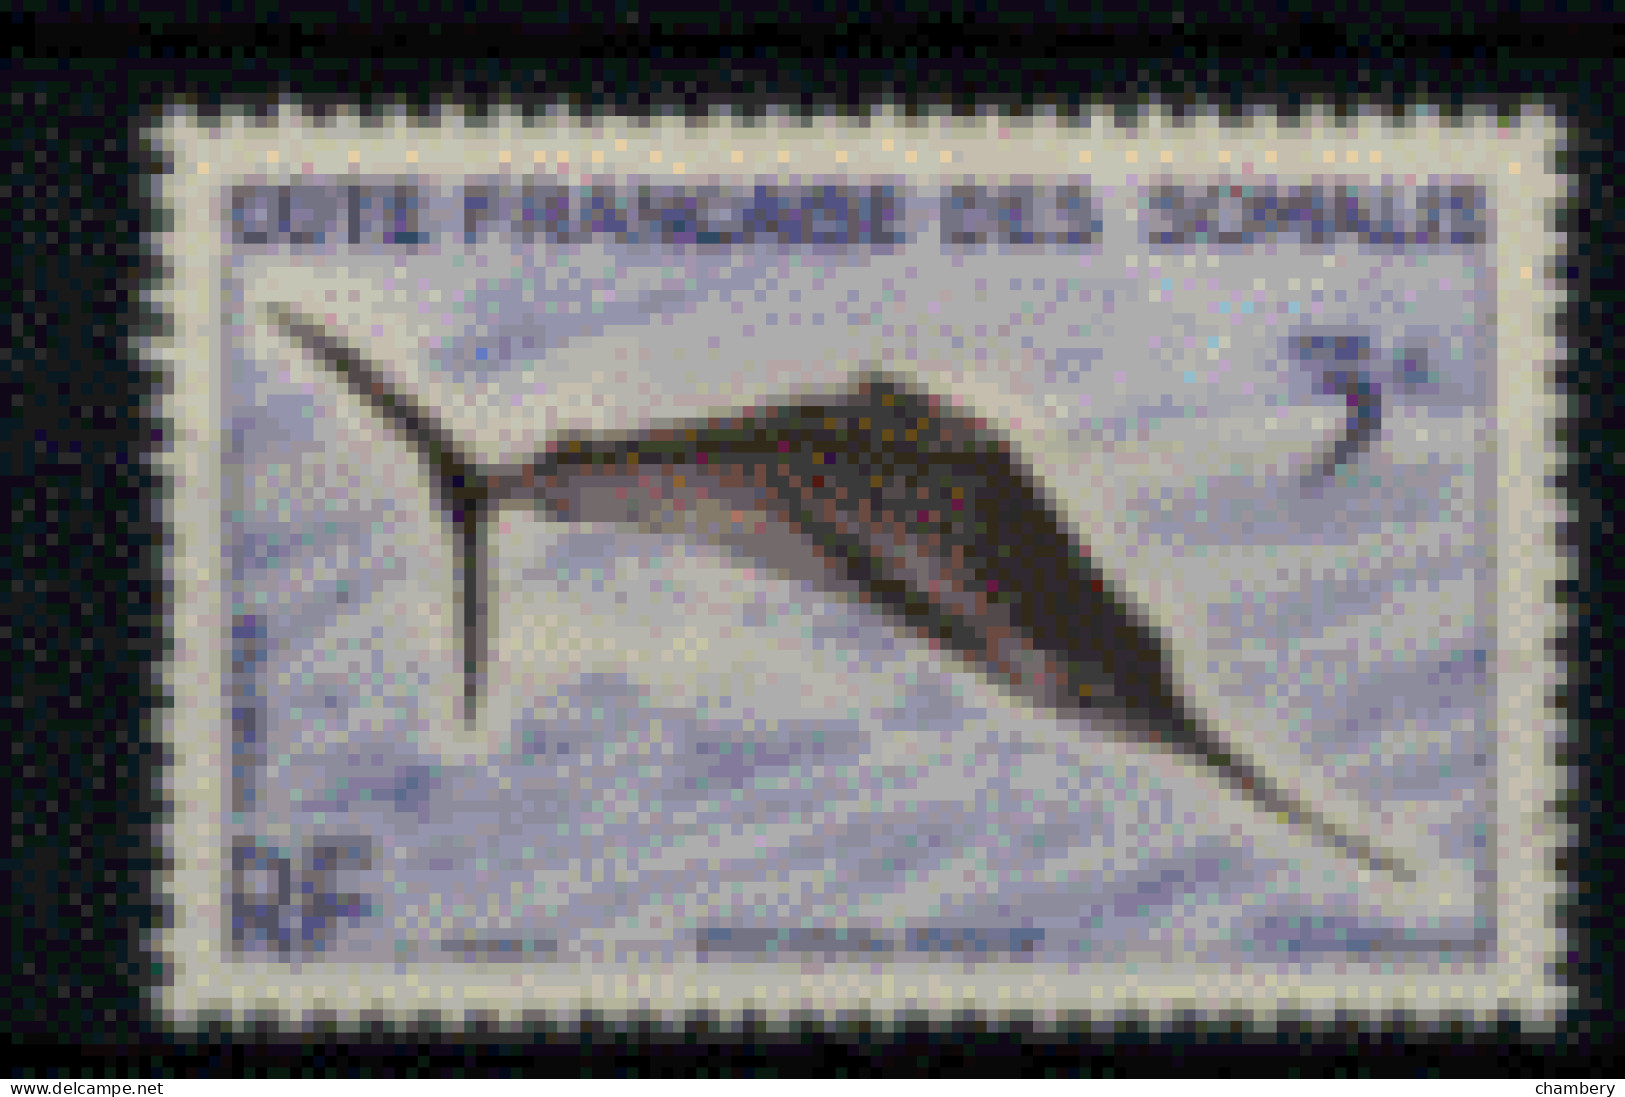 France - Somalies - "Poisson : Pique" - Neuf 1* N° 294 De 1959/60 - Neufs